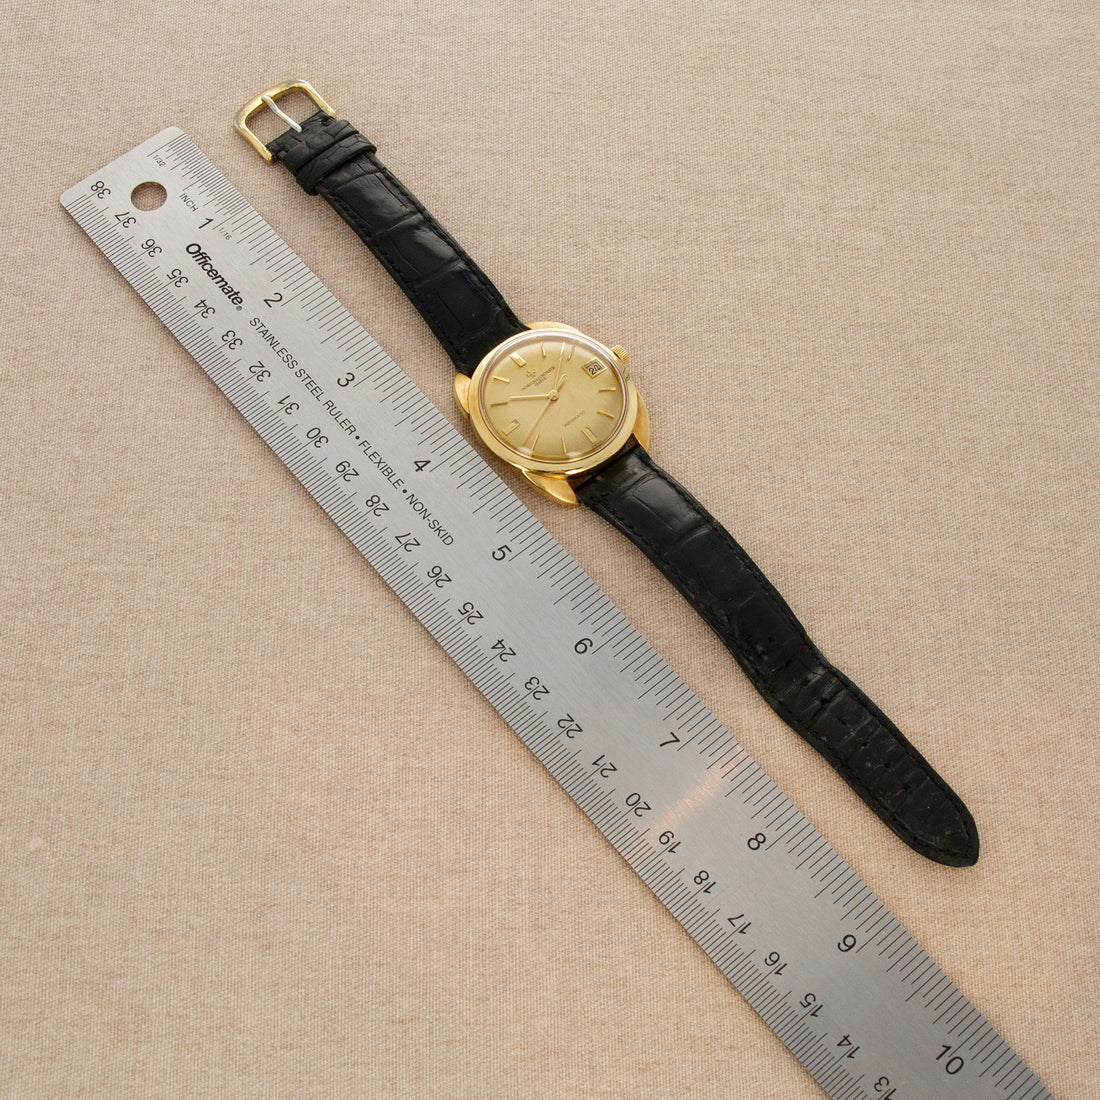 Vacheron Constantin Yellow Gold Chronometre Royal Ref. 6694